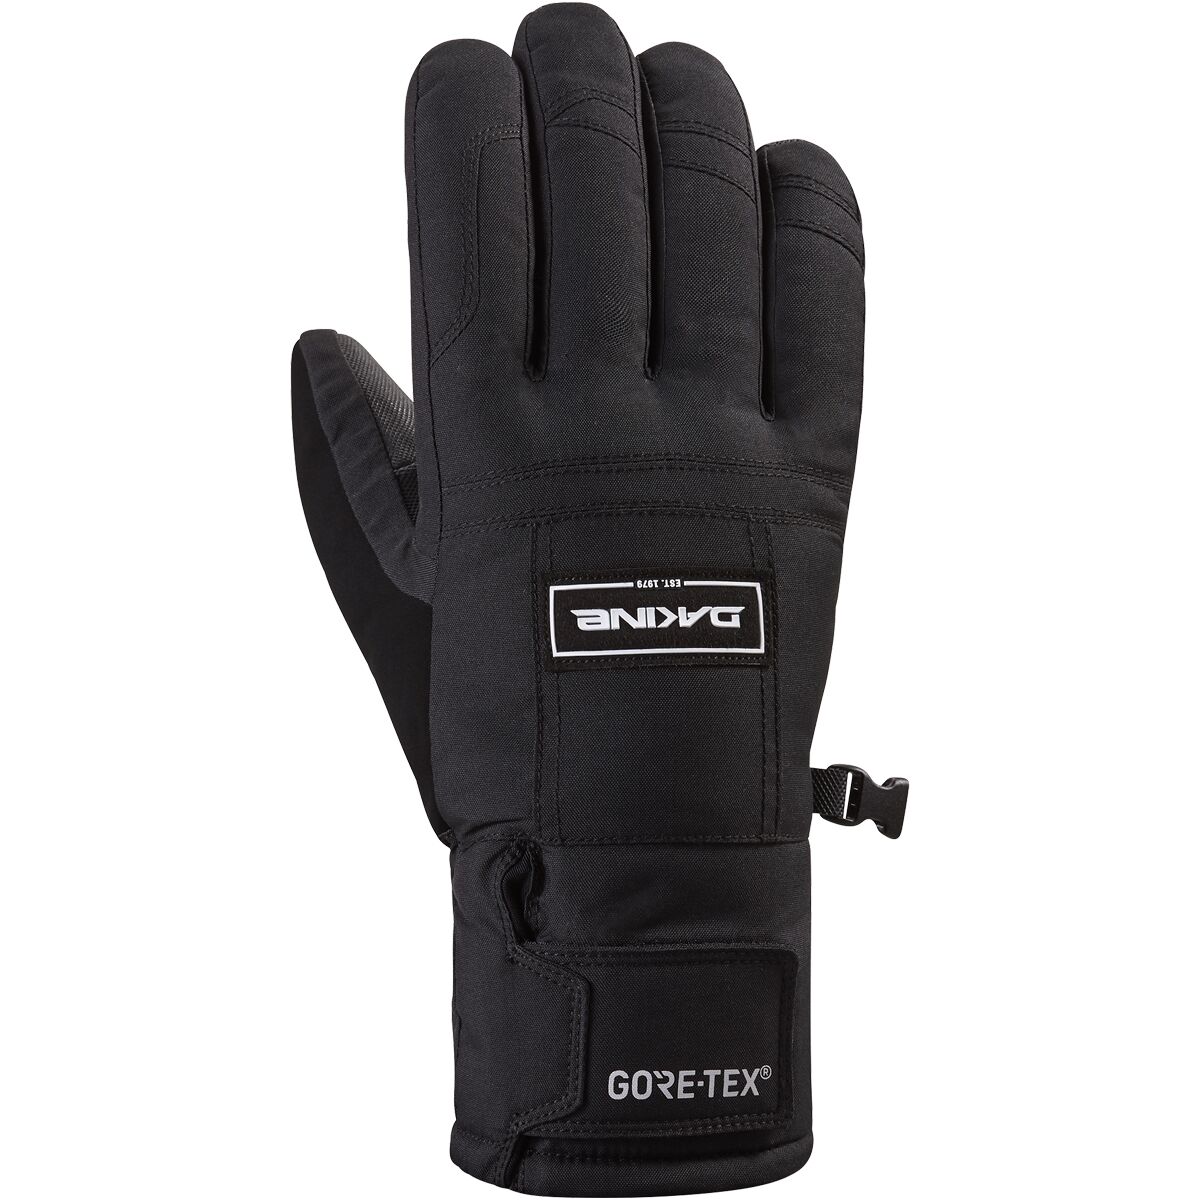 Bronco GORE-TEX Glove - Men